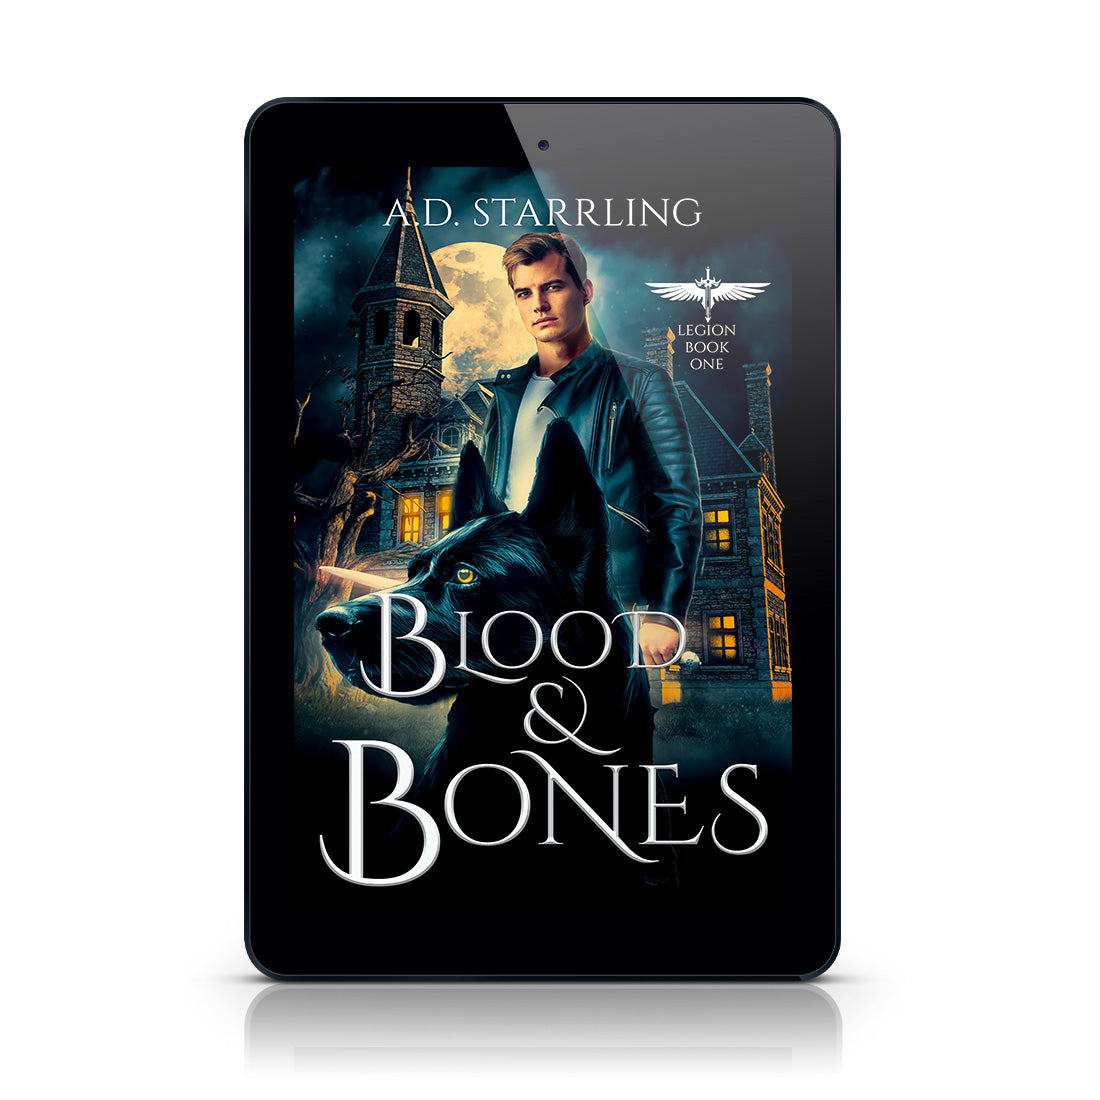 Blood and Bones (Legion Book 1) EBOOK urban fantasy action adventure author ad starrling